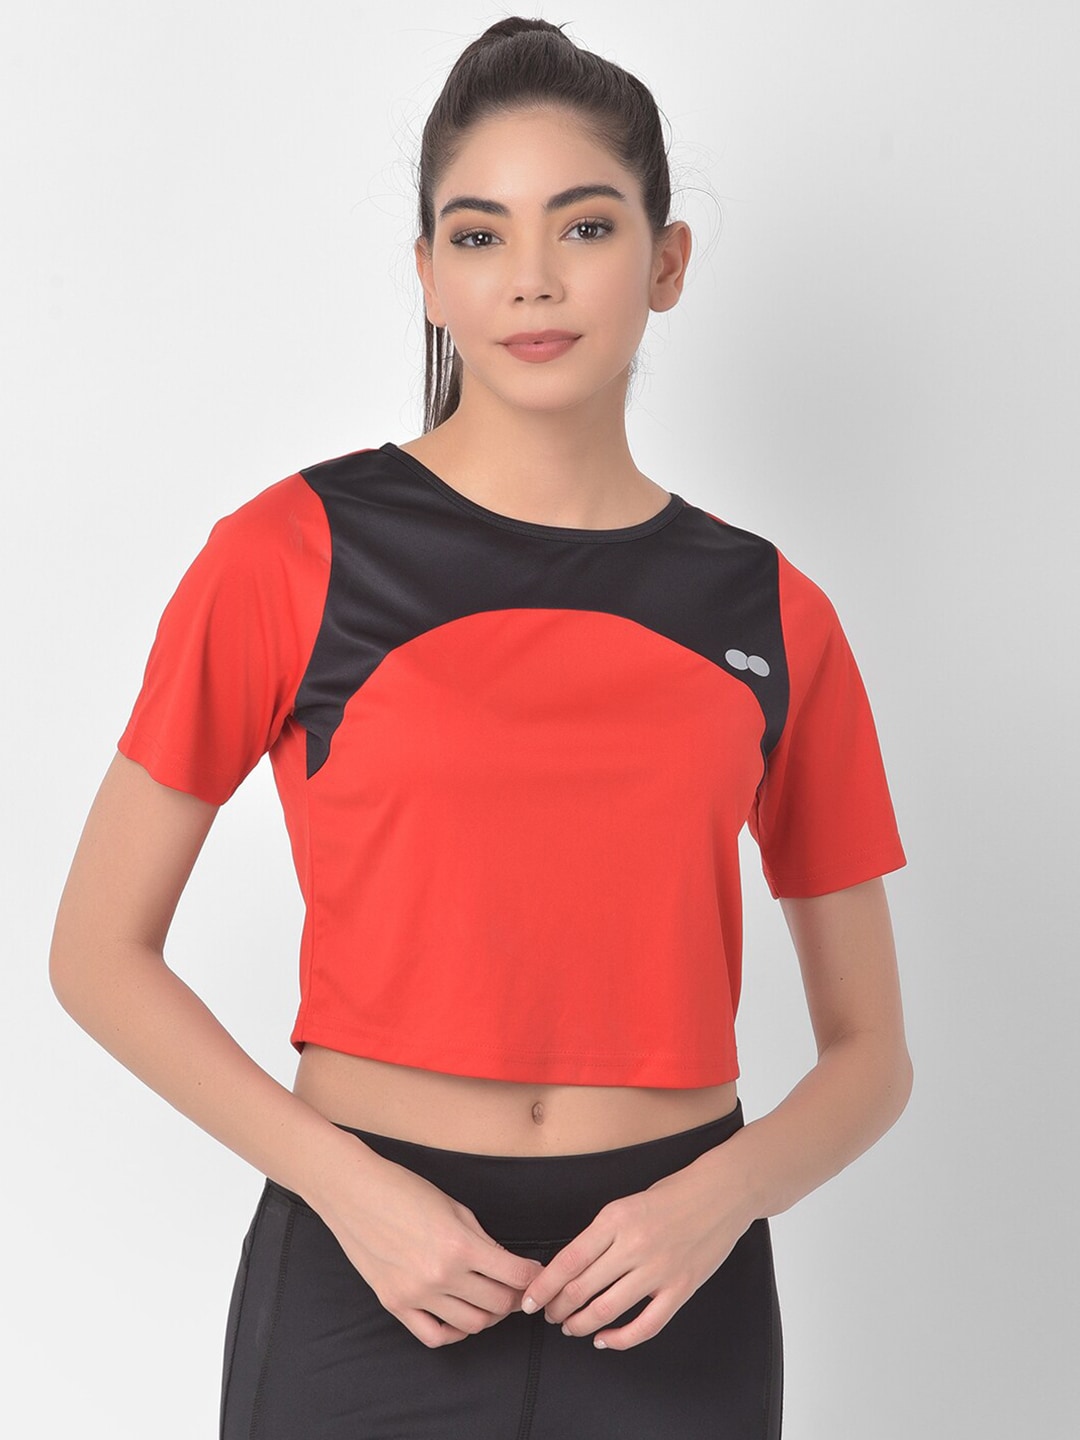 Clovia Women Red & Black Colourblocked Training or Gym T-shirt Price in India